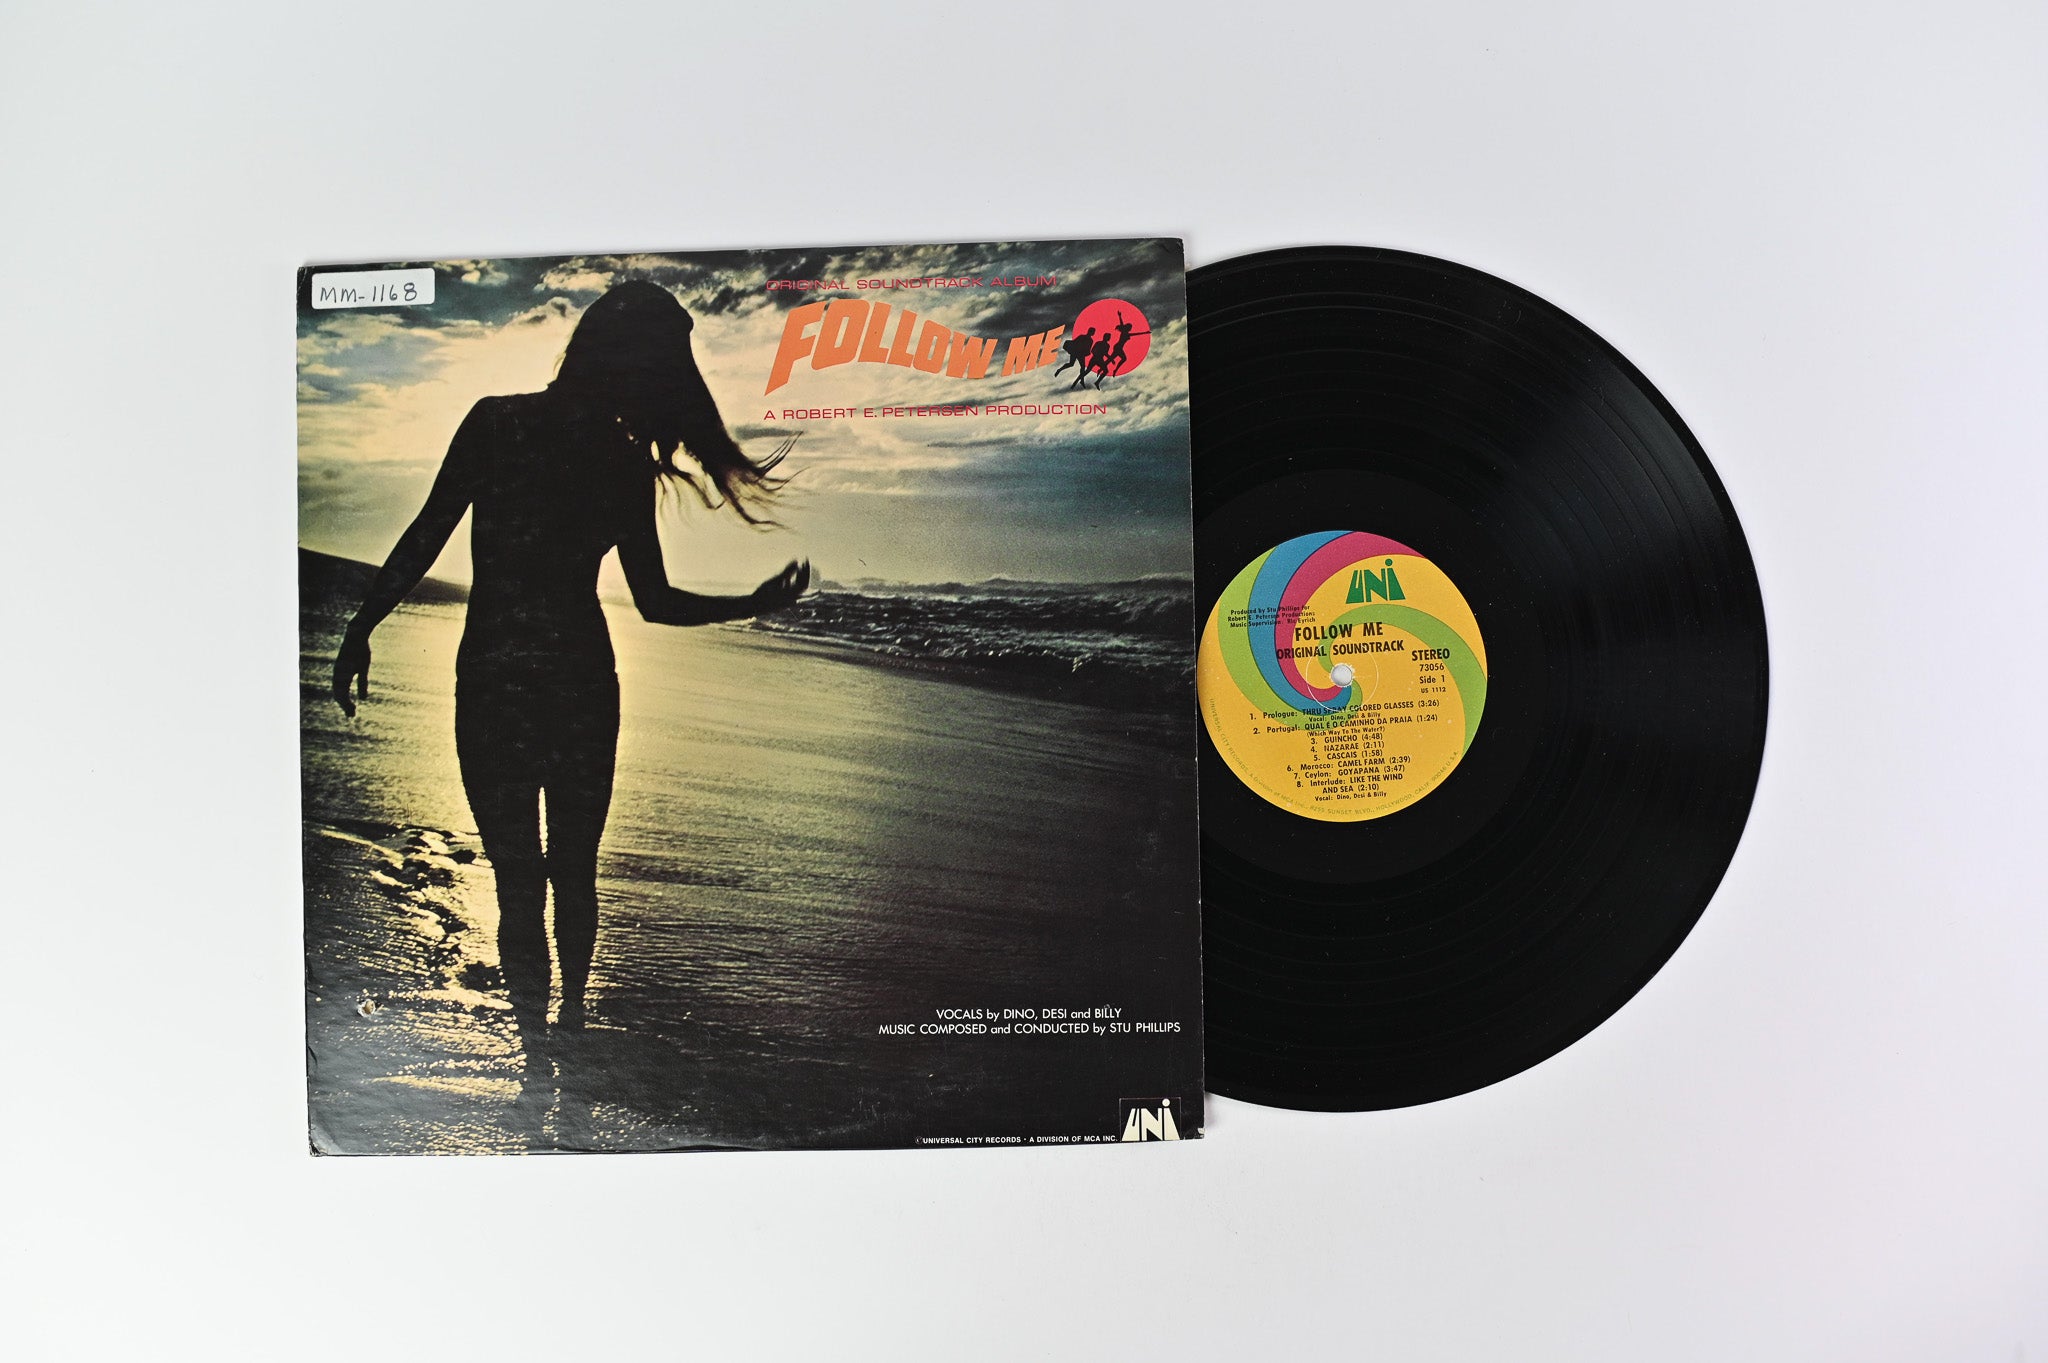 Stu Phillips - Follow Me (Original Soundtrack Album) on UNI Records